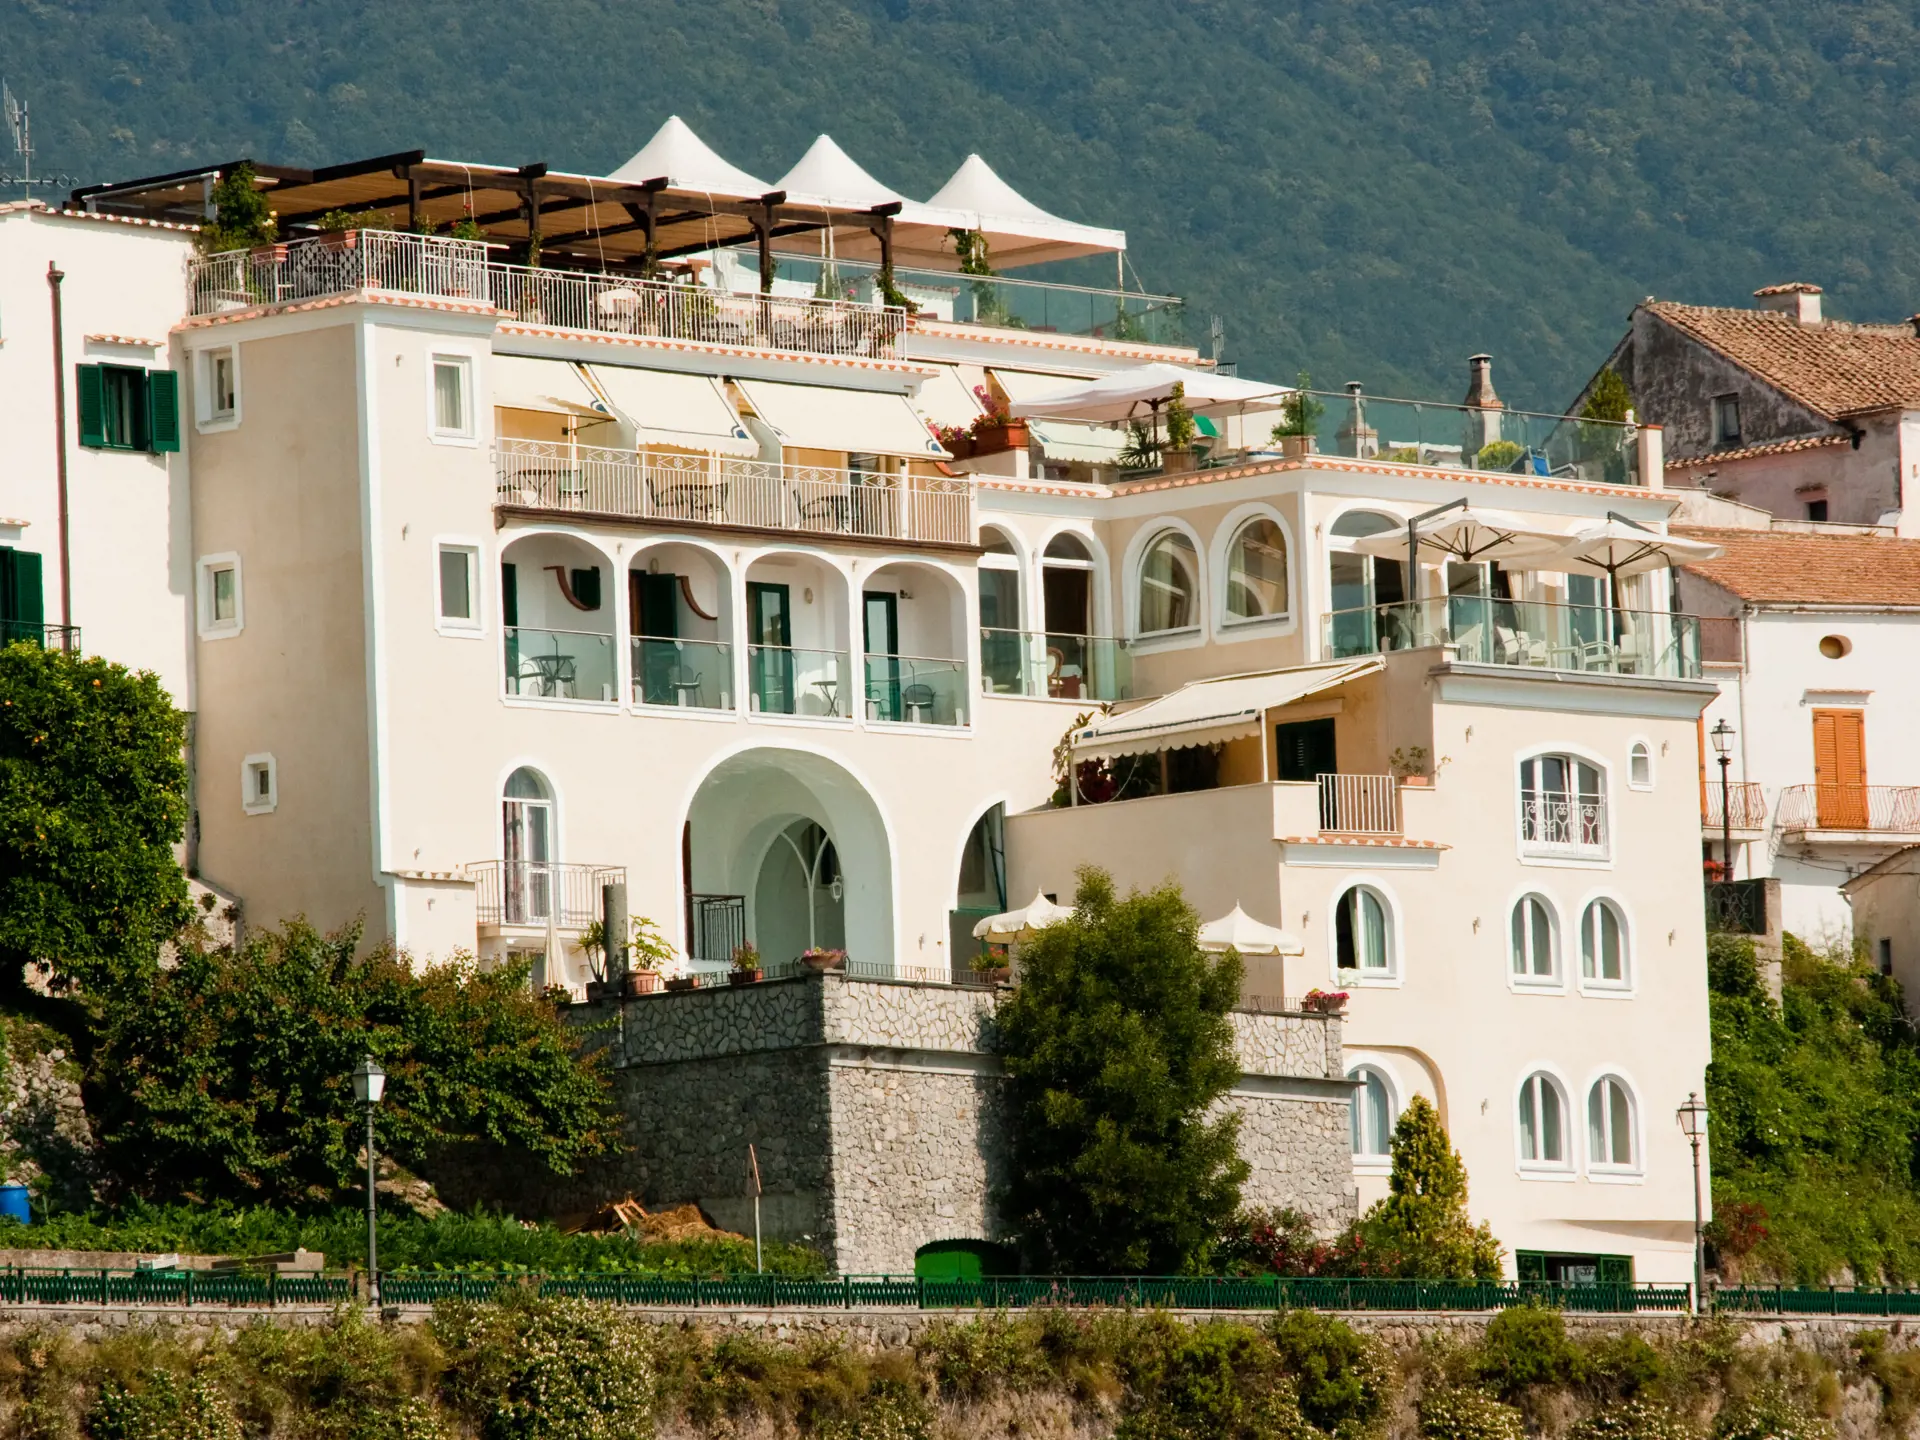 Hotel Bonadies ligger på en sluttning i Ravello med en unik utsikt